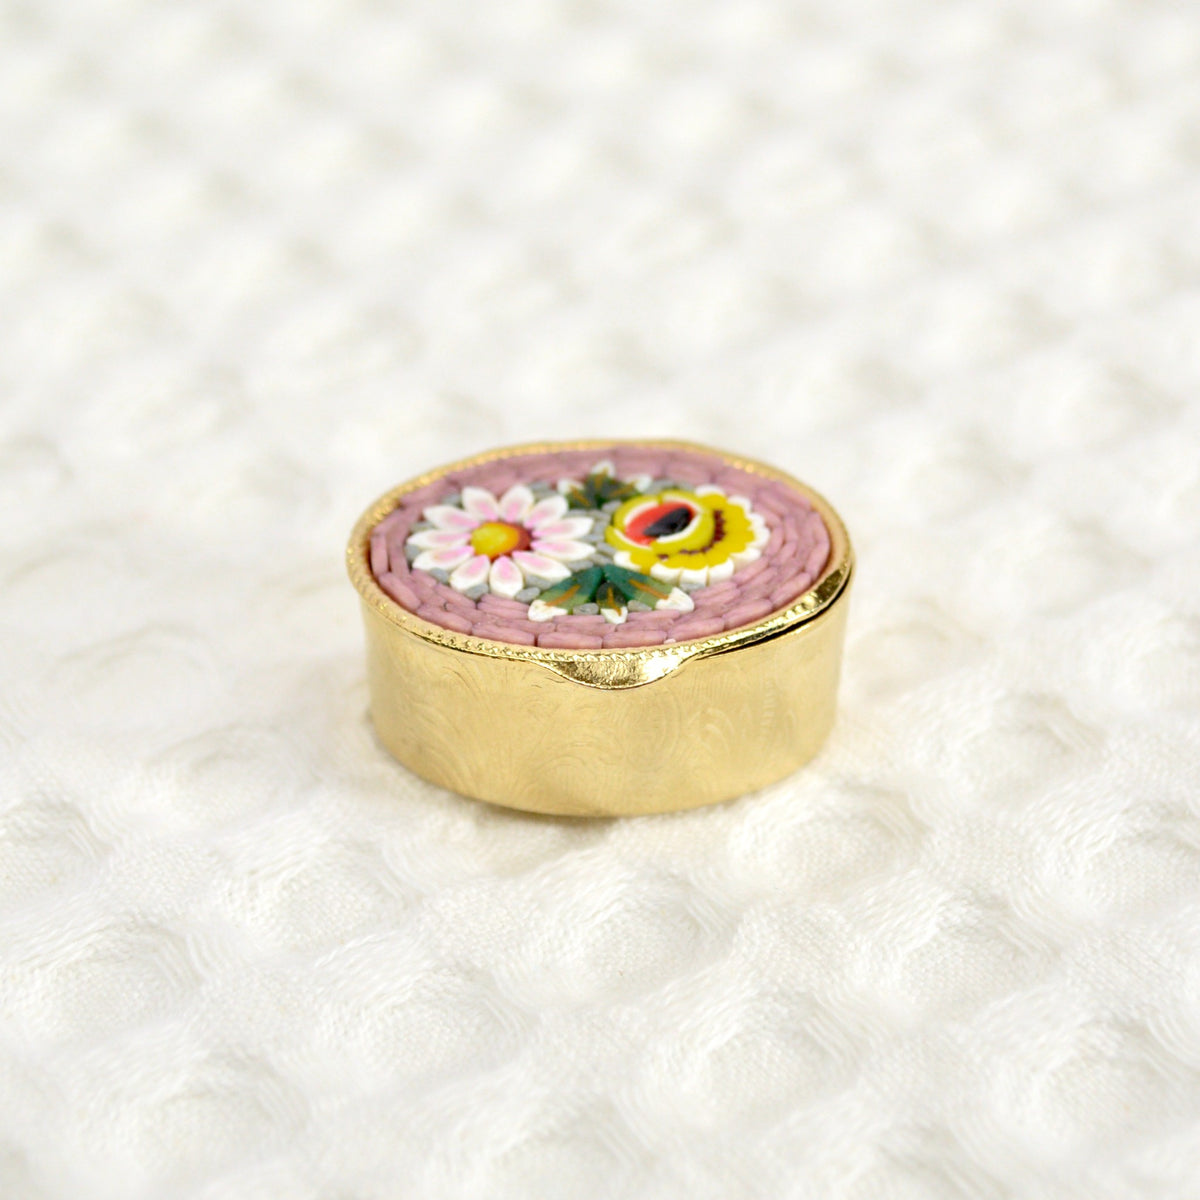 Florentine Mosaic Small Oval Pillbox, Made in Italy - My Italian Decor